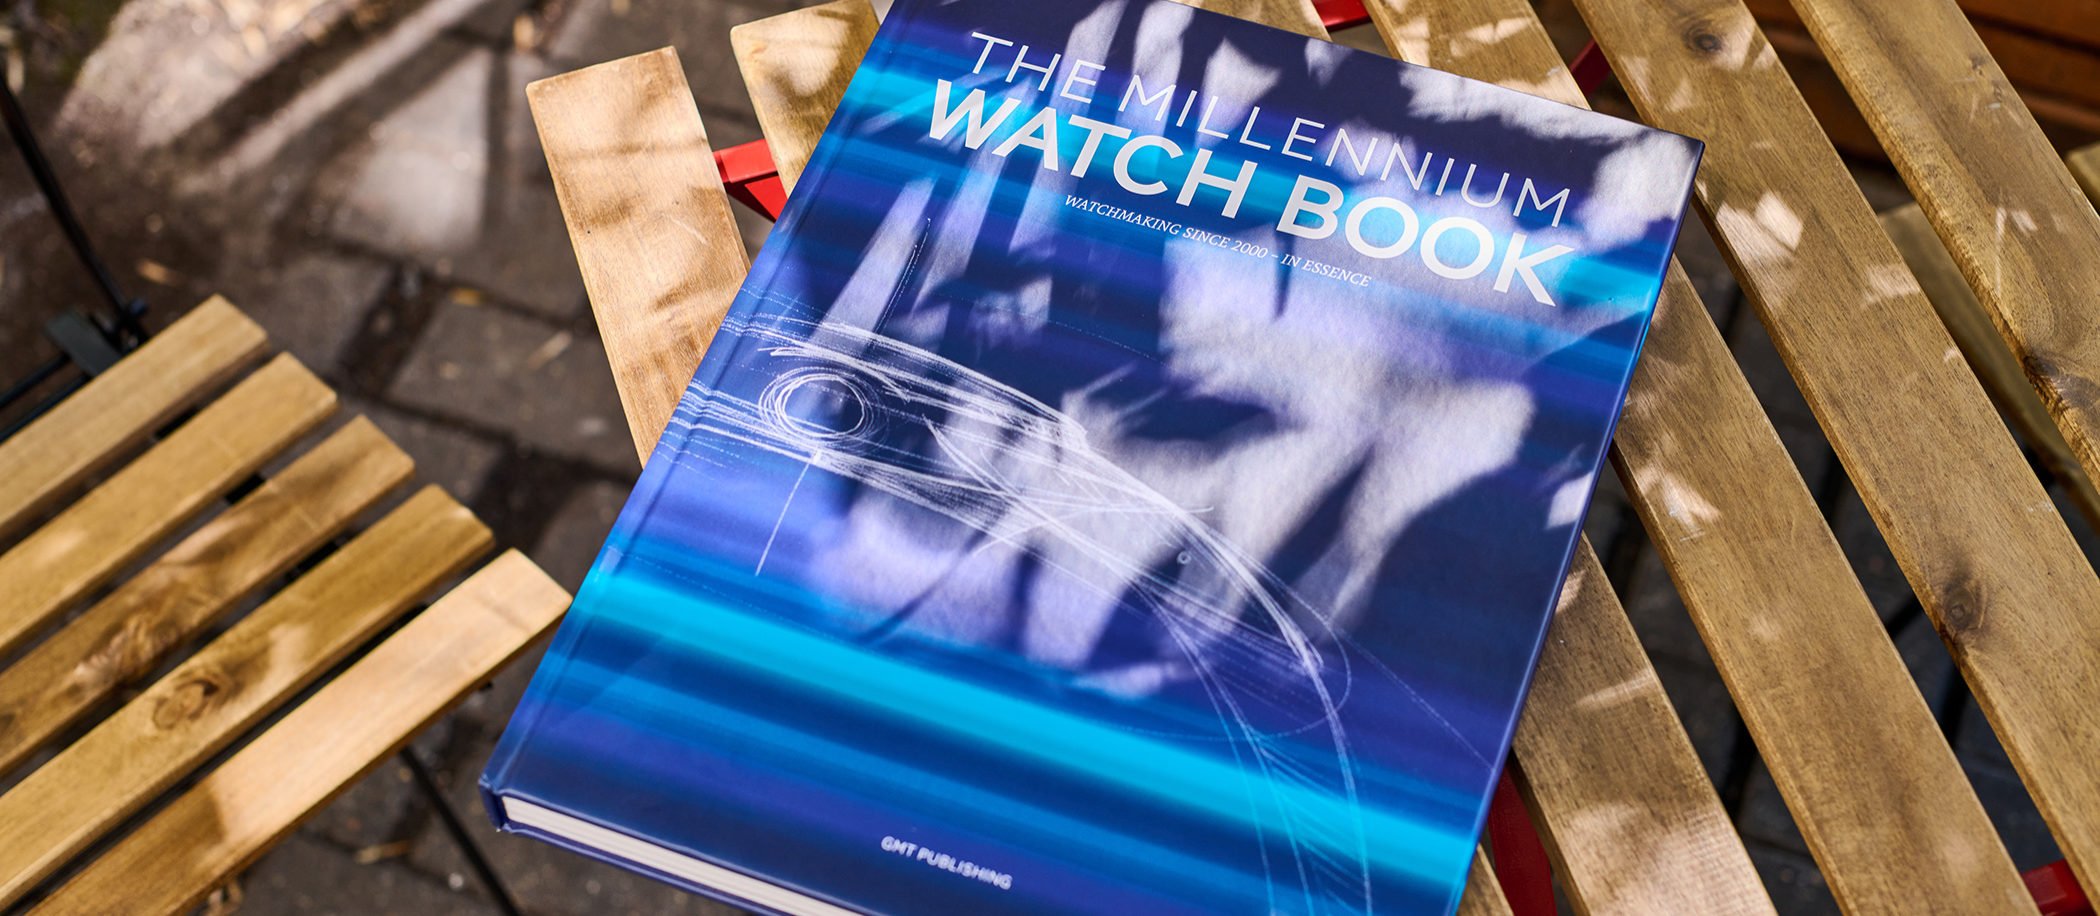 The Millennium Watch Book